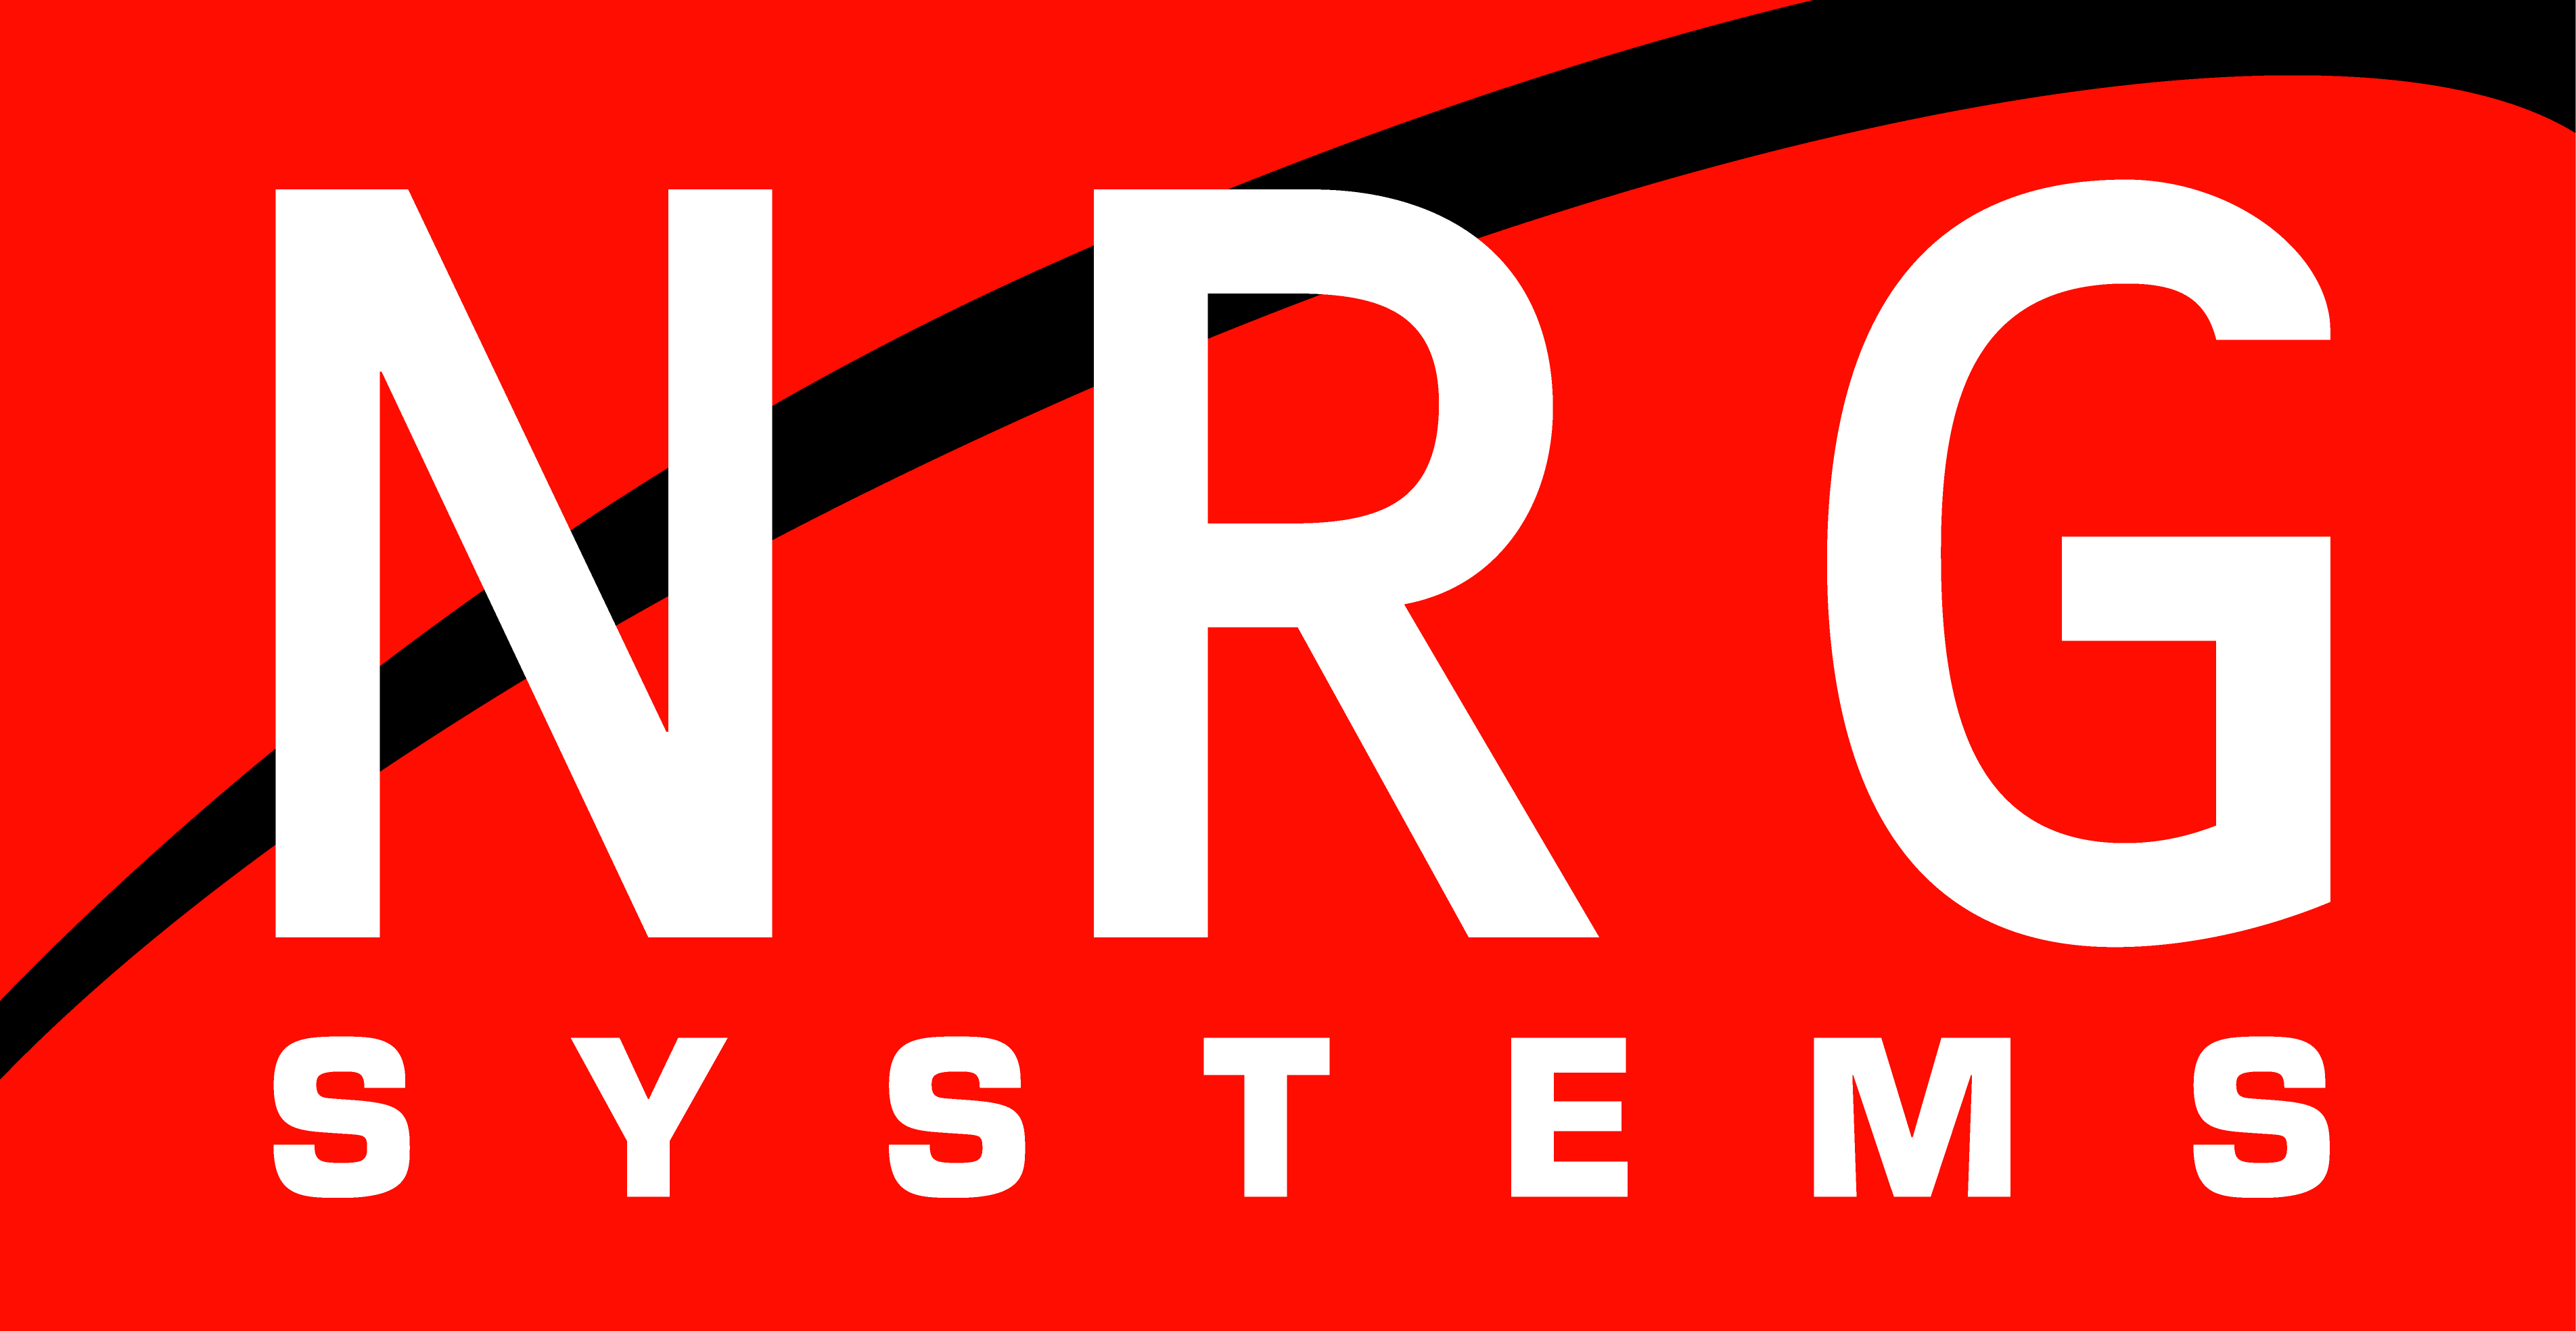 NRG Systems Logo